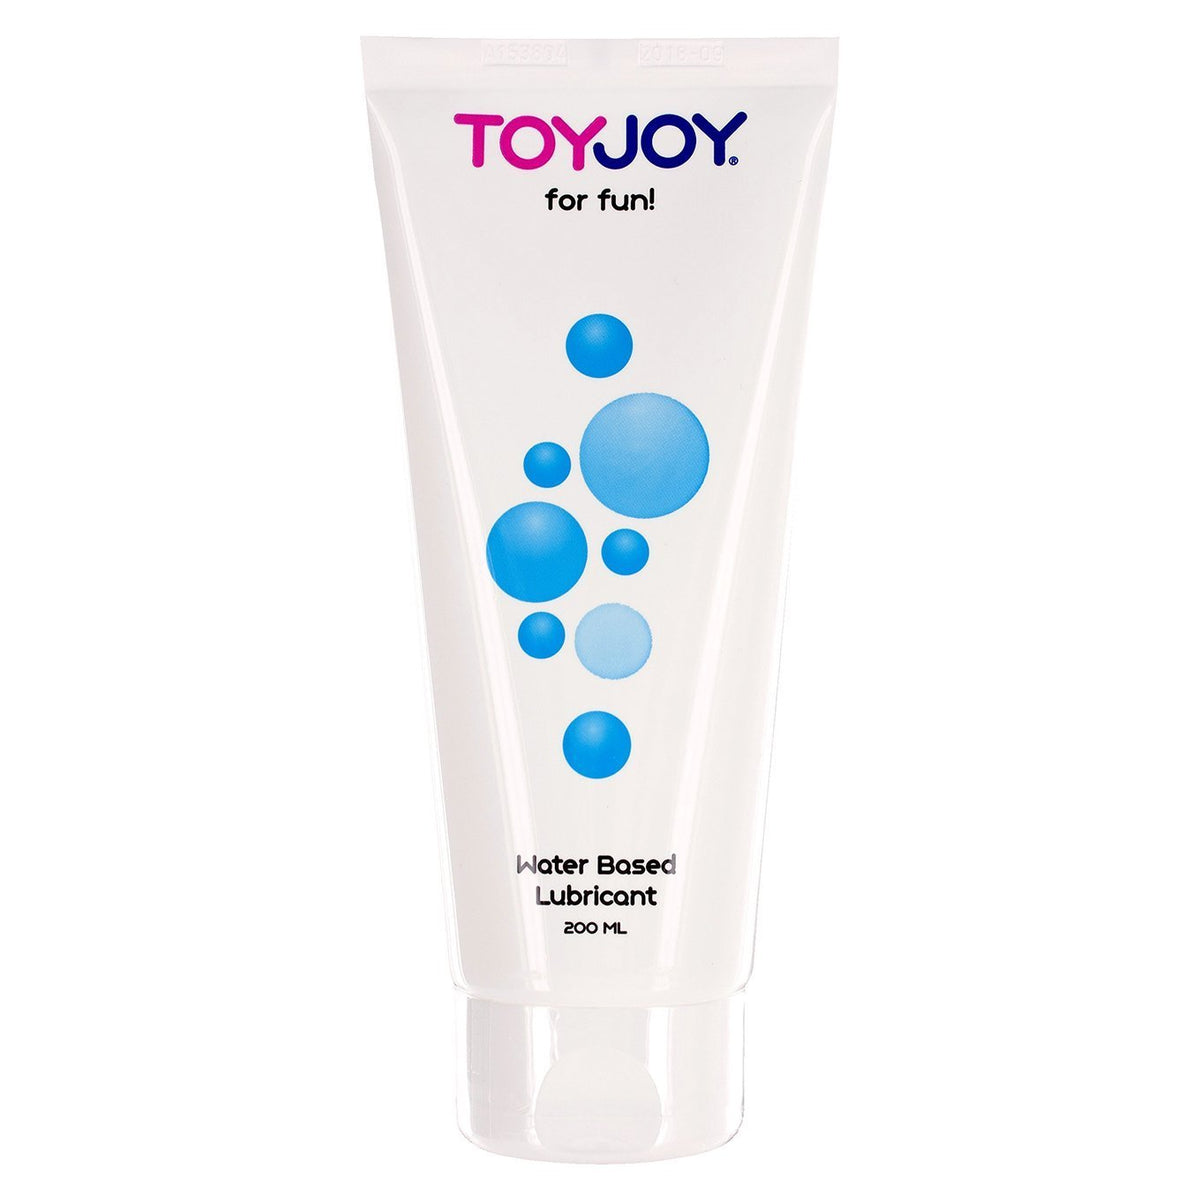 ToyJoy - Waterbased Lubricant 200 ml (Lube) -  Lube (Water Based)  Durio.sg